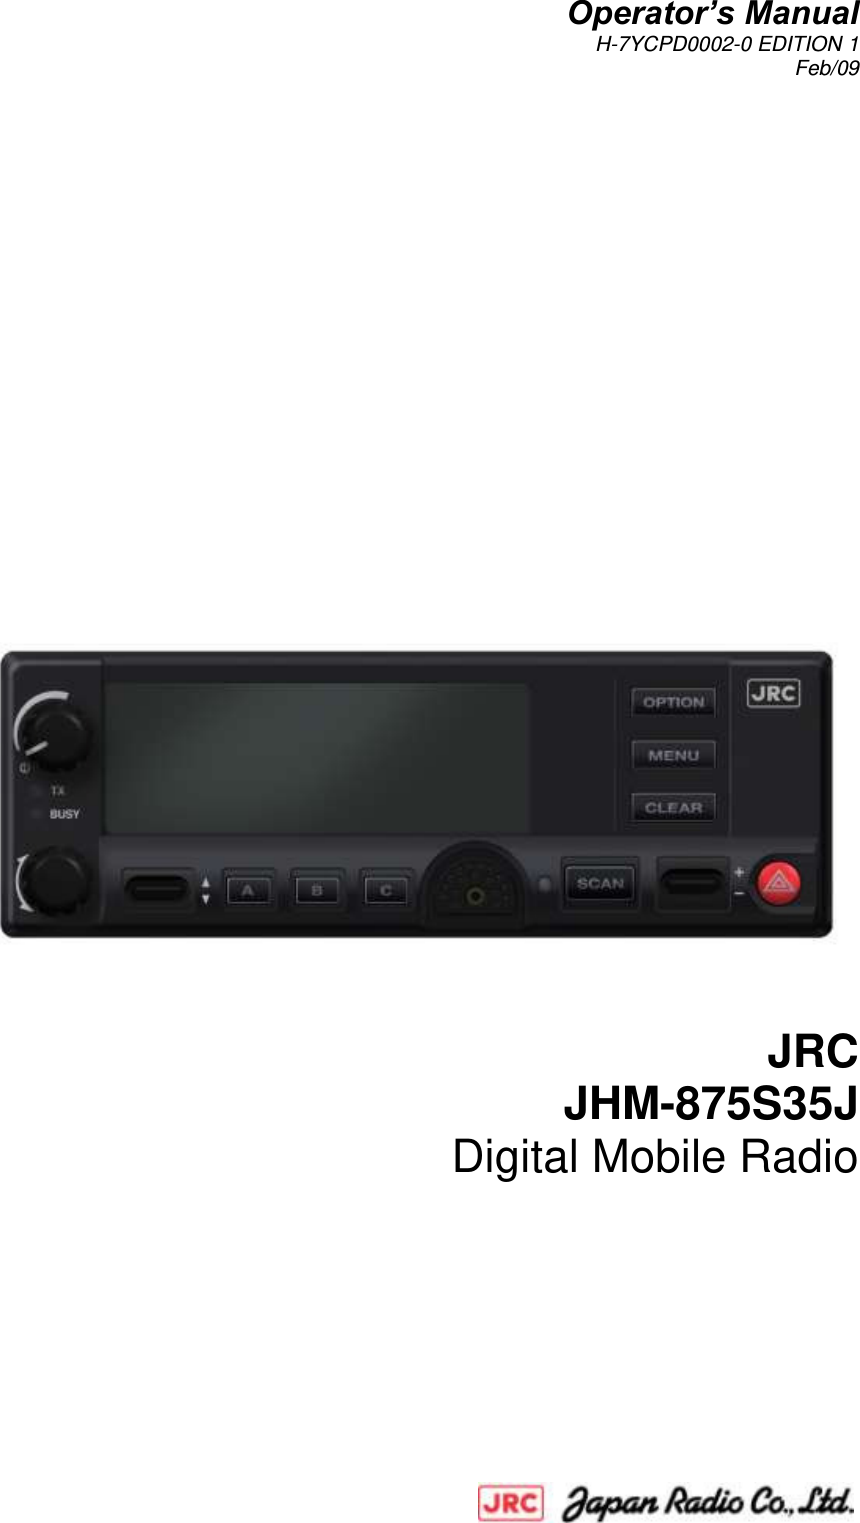 Operator’s Manual H-7YCPD0002-0 EDITION 1 Feb/09                                   JRC JHM-875S35J Digital Mobile Radio       